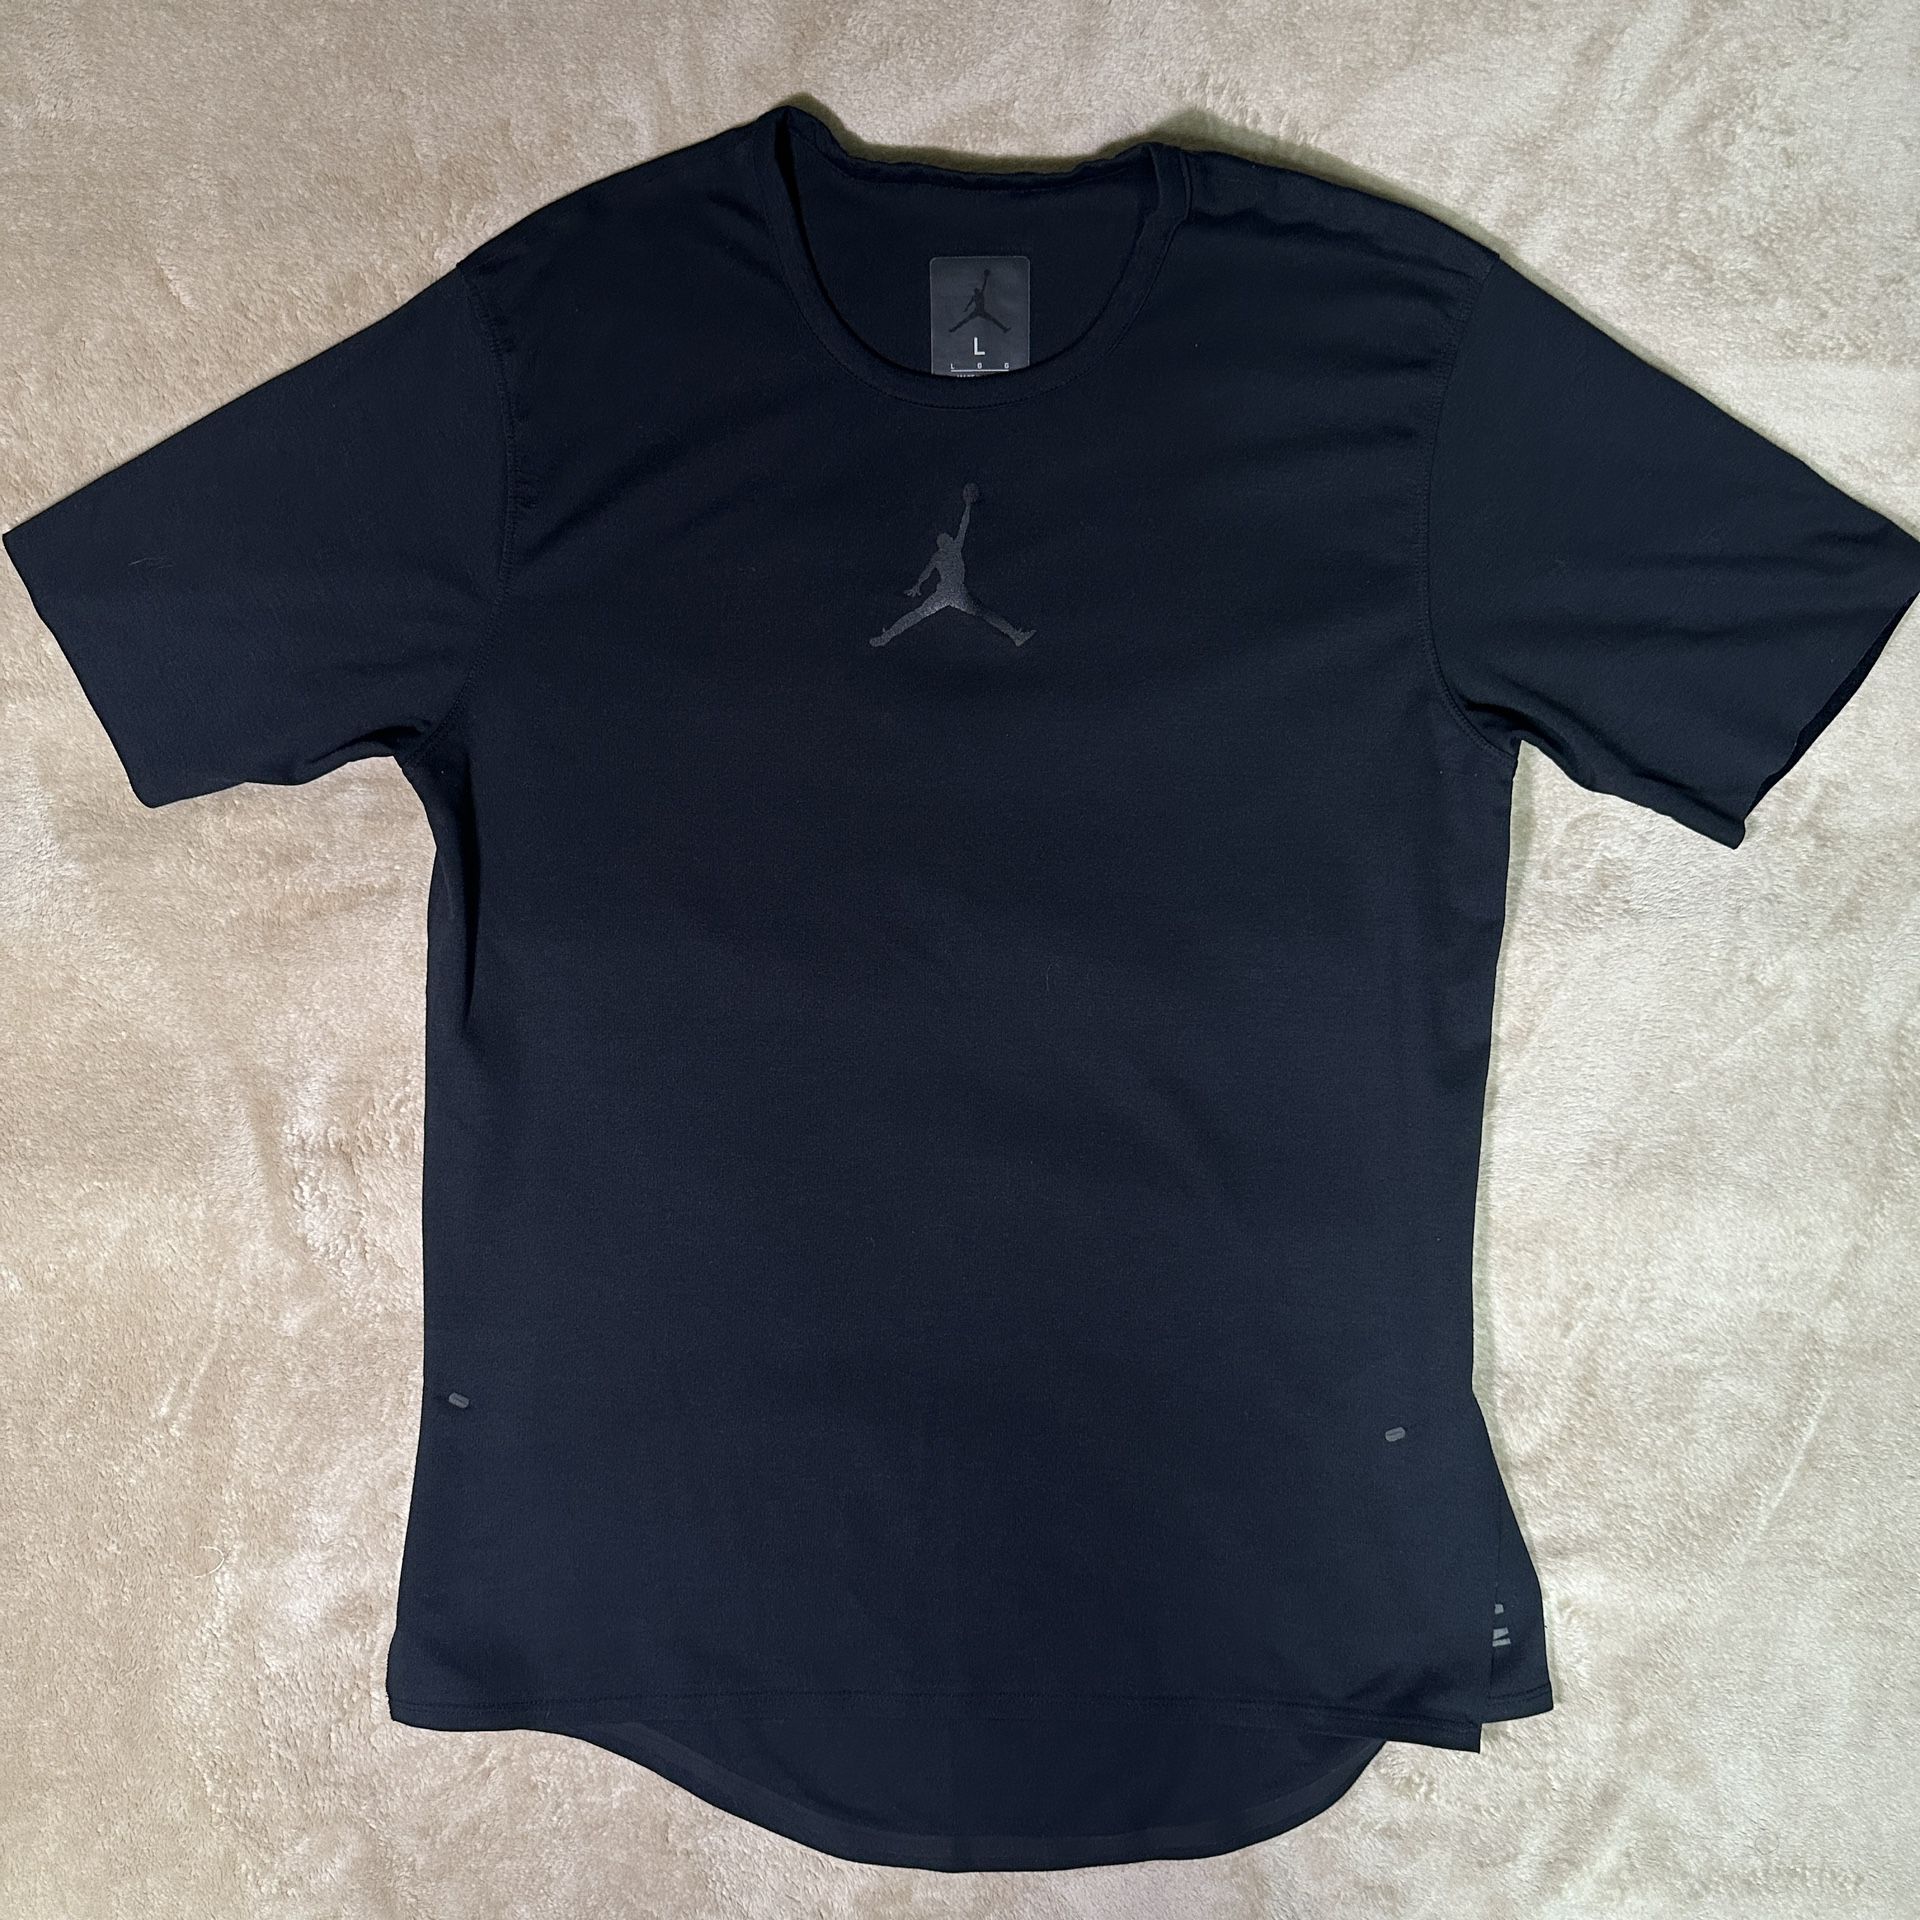 Air Jordan Short Sleeve Shirt Men's Size L little defect on sleeve as is